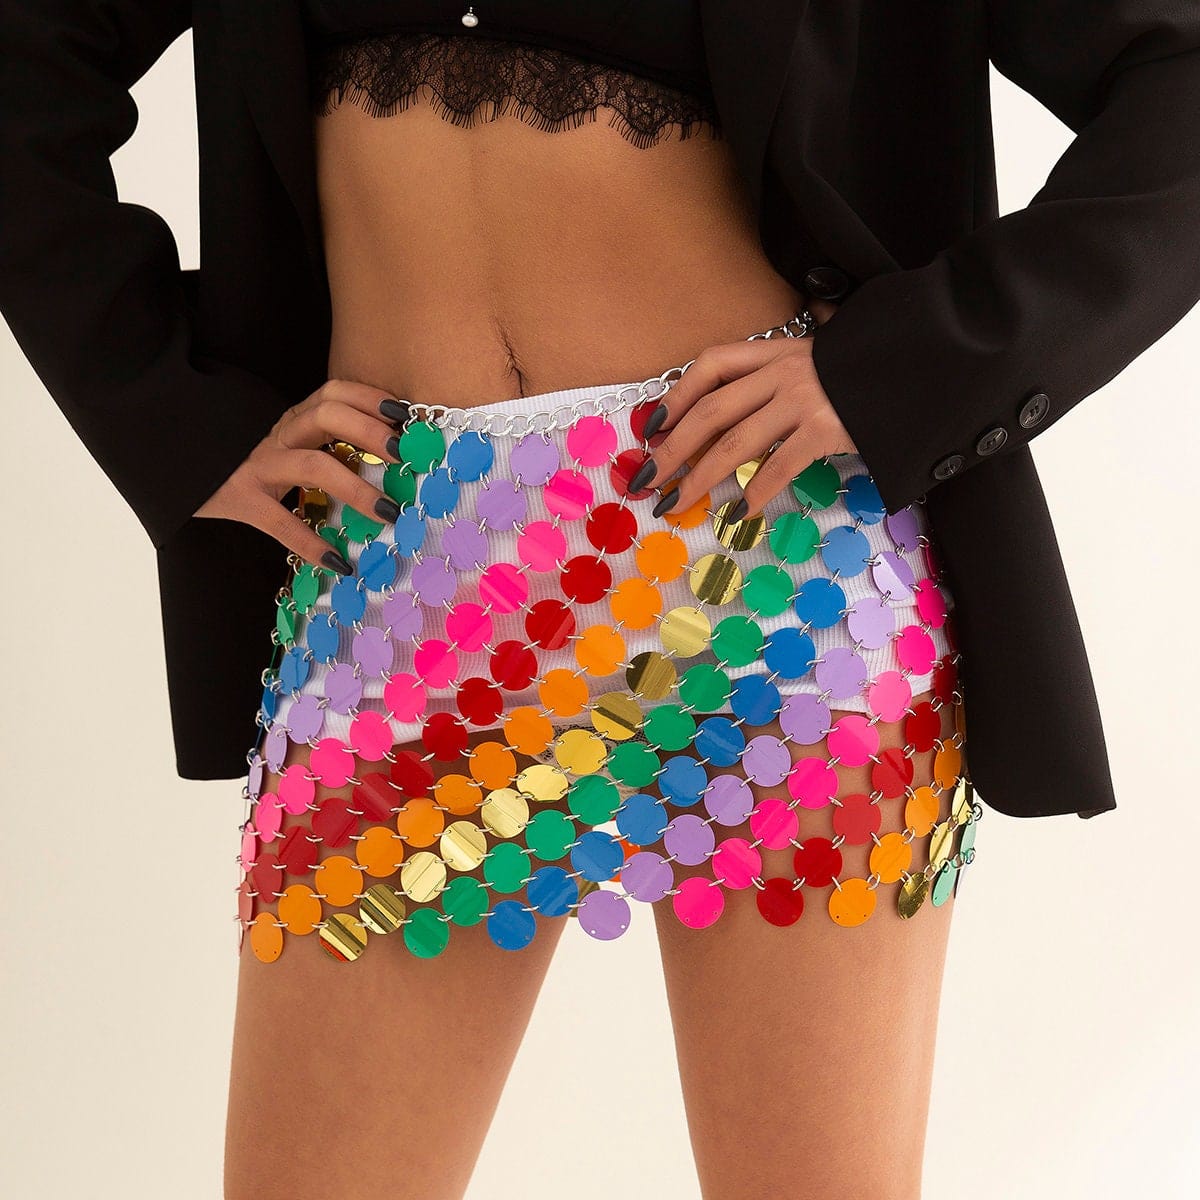 Handmade Rainbow Squamous Glitter Sequins Patchwork Strappy Nightclub Party Skirt - ArtGalleryZen